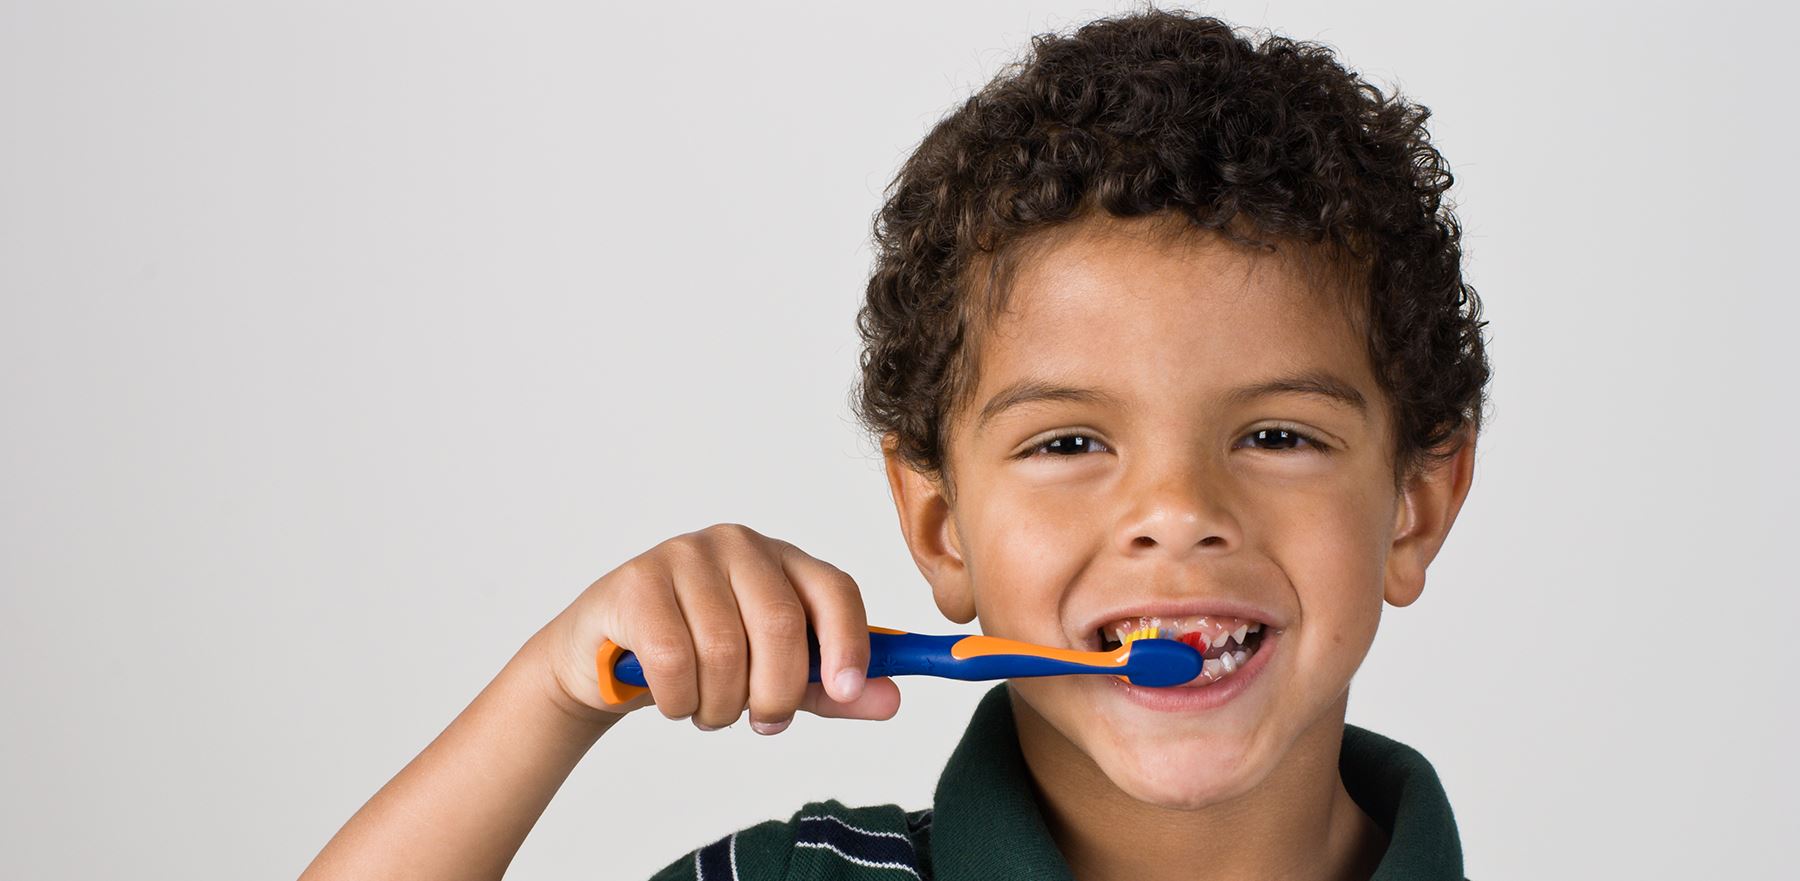 Child Brushing His Teeth